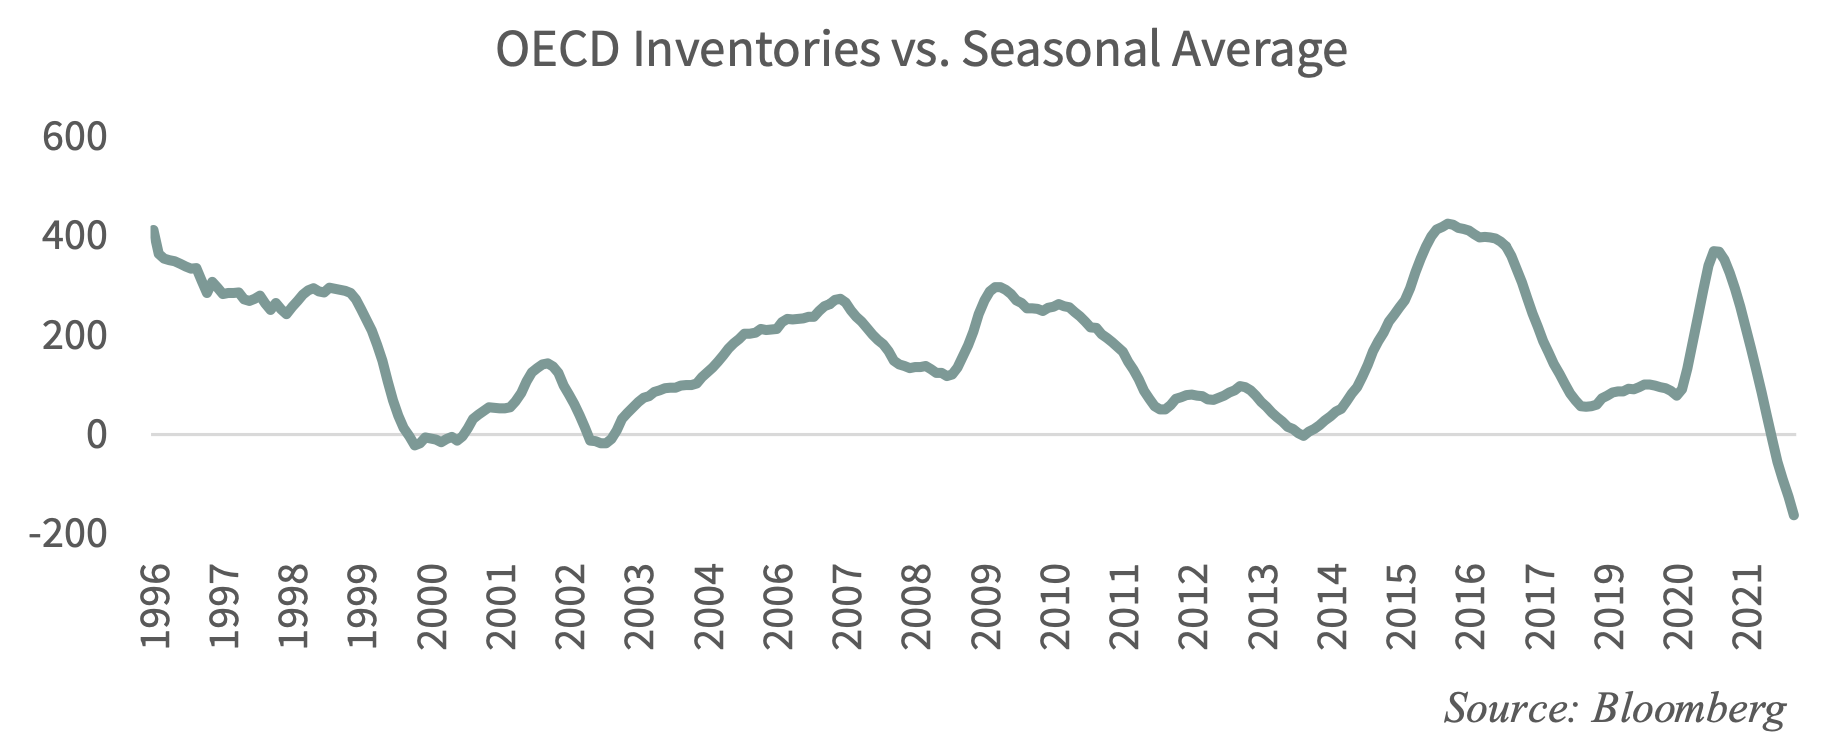 OECD Inventories vs. Seasonal Average